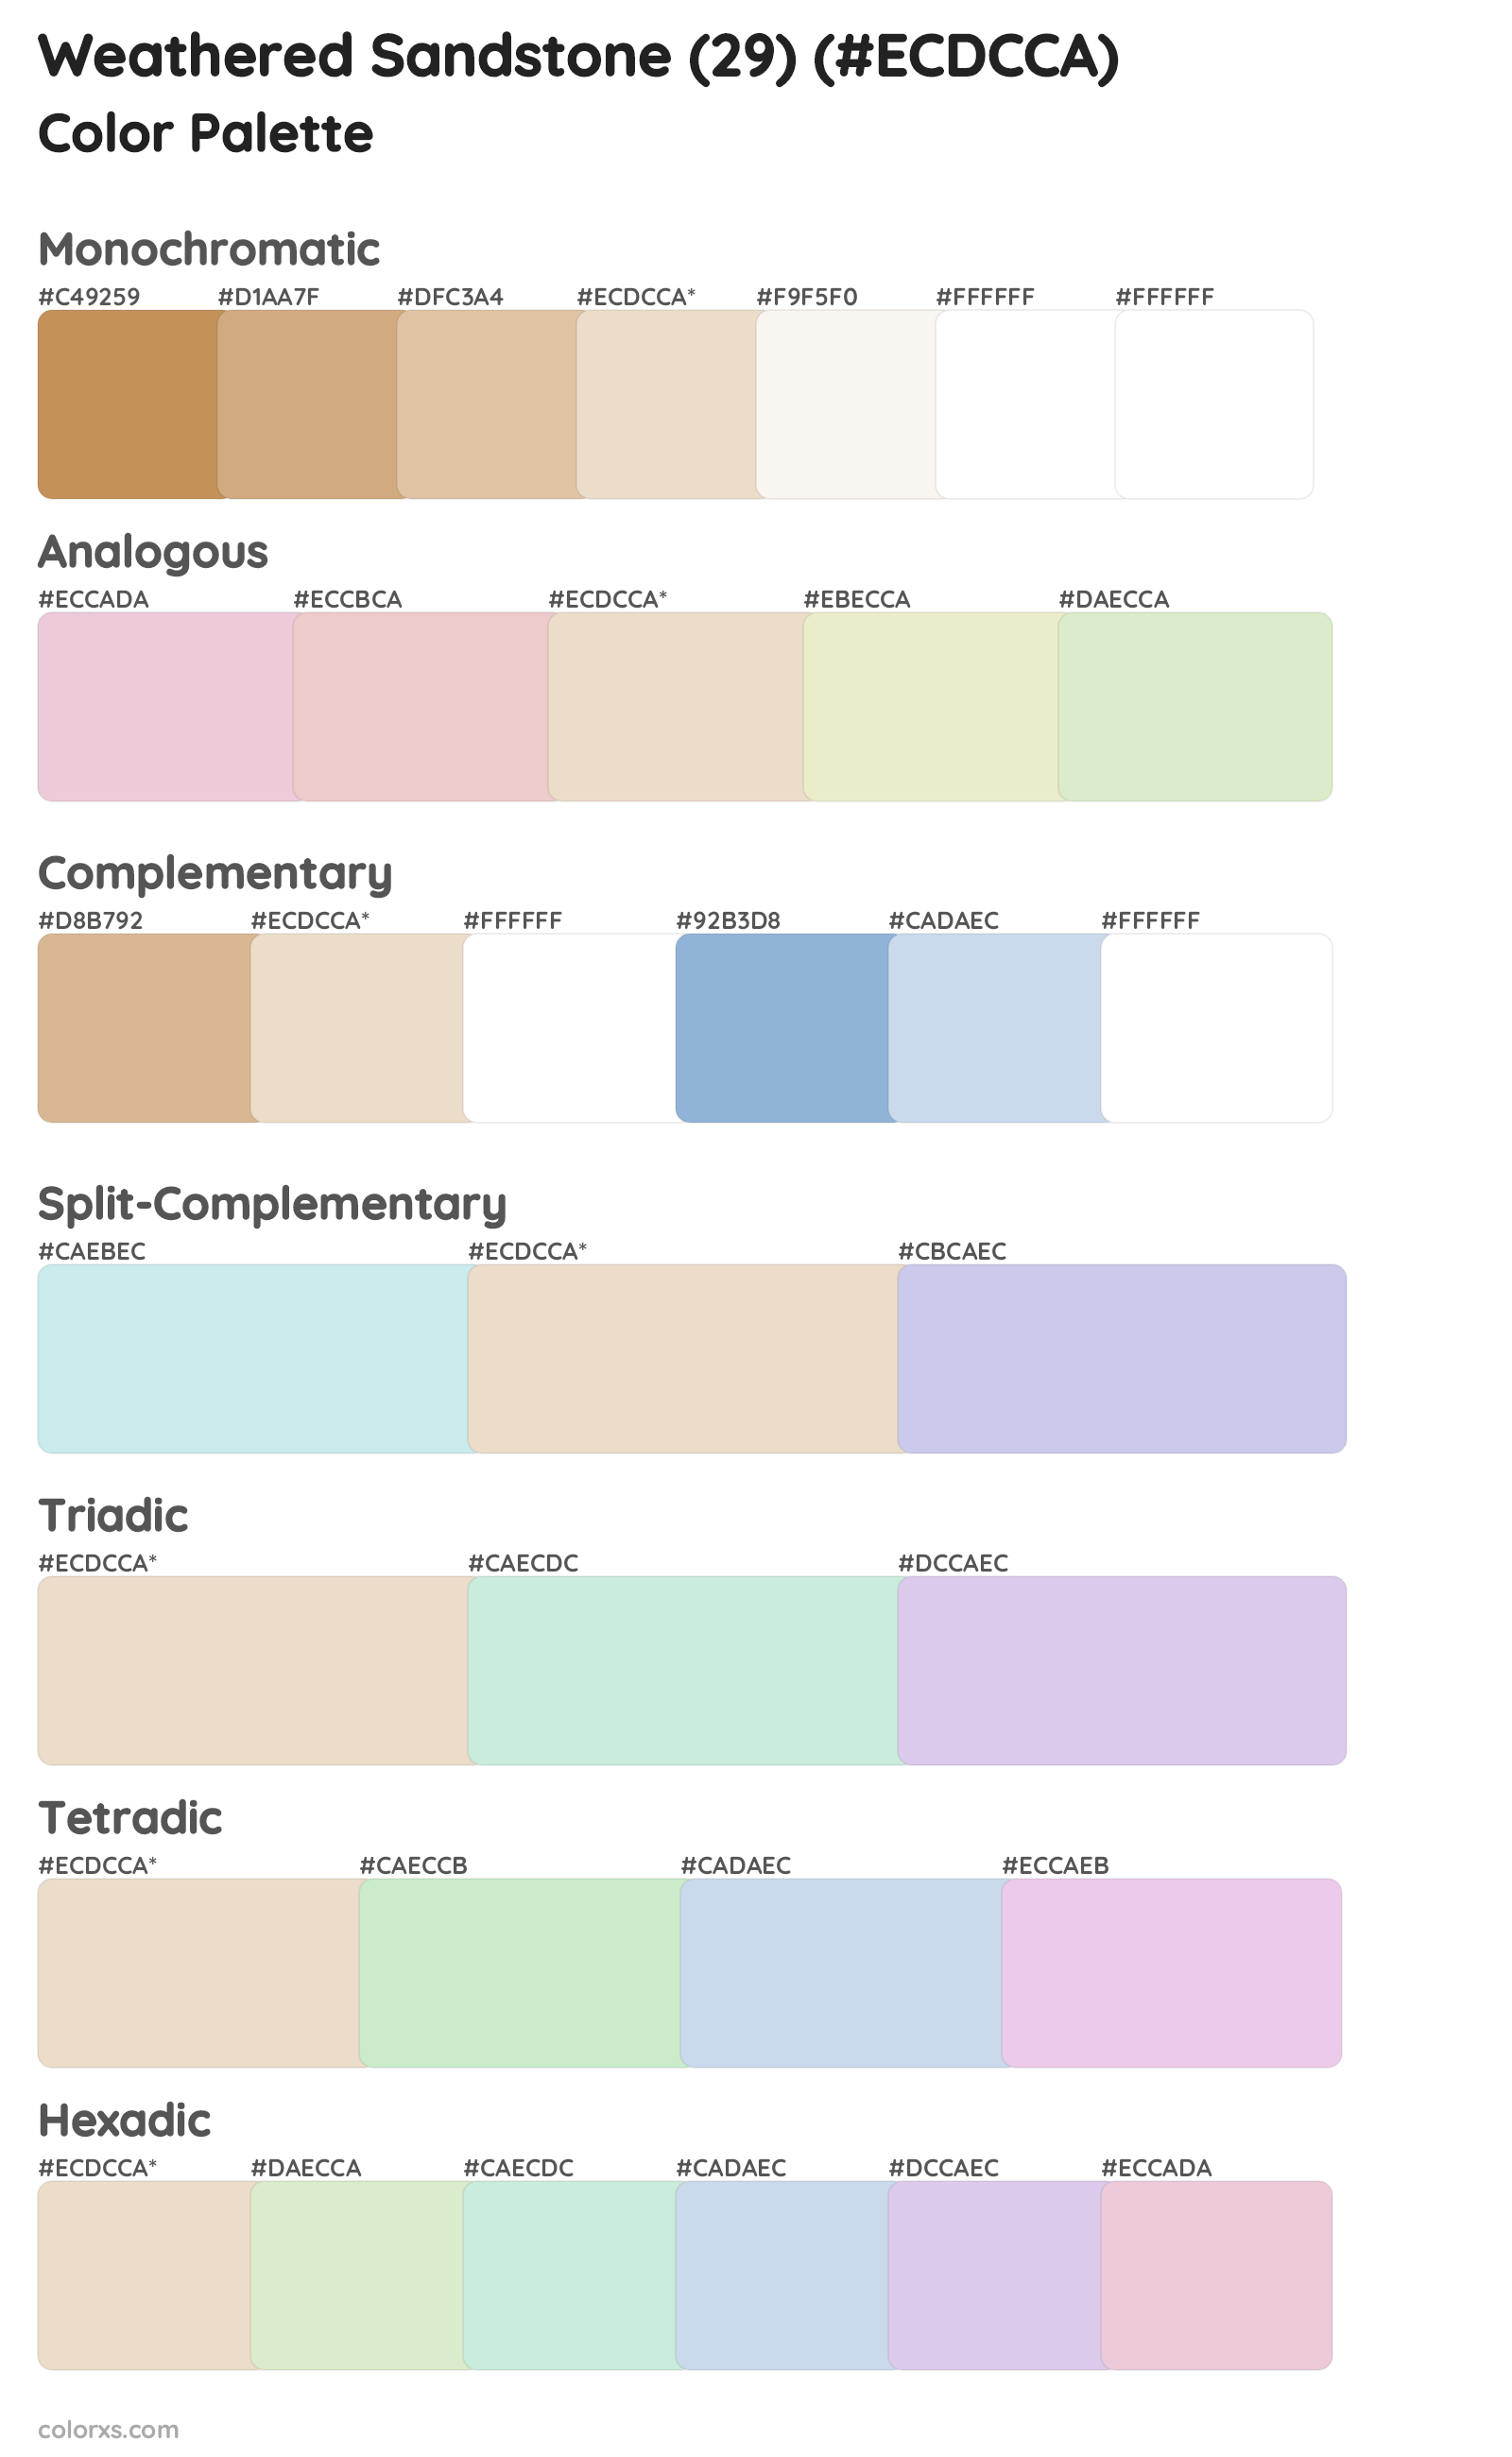 Weathered Sandstone (29) Color Scheme Palettes